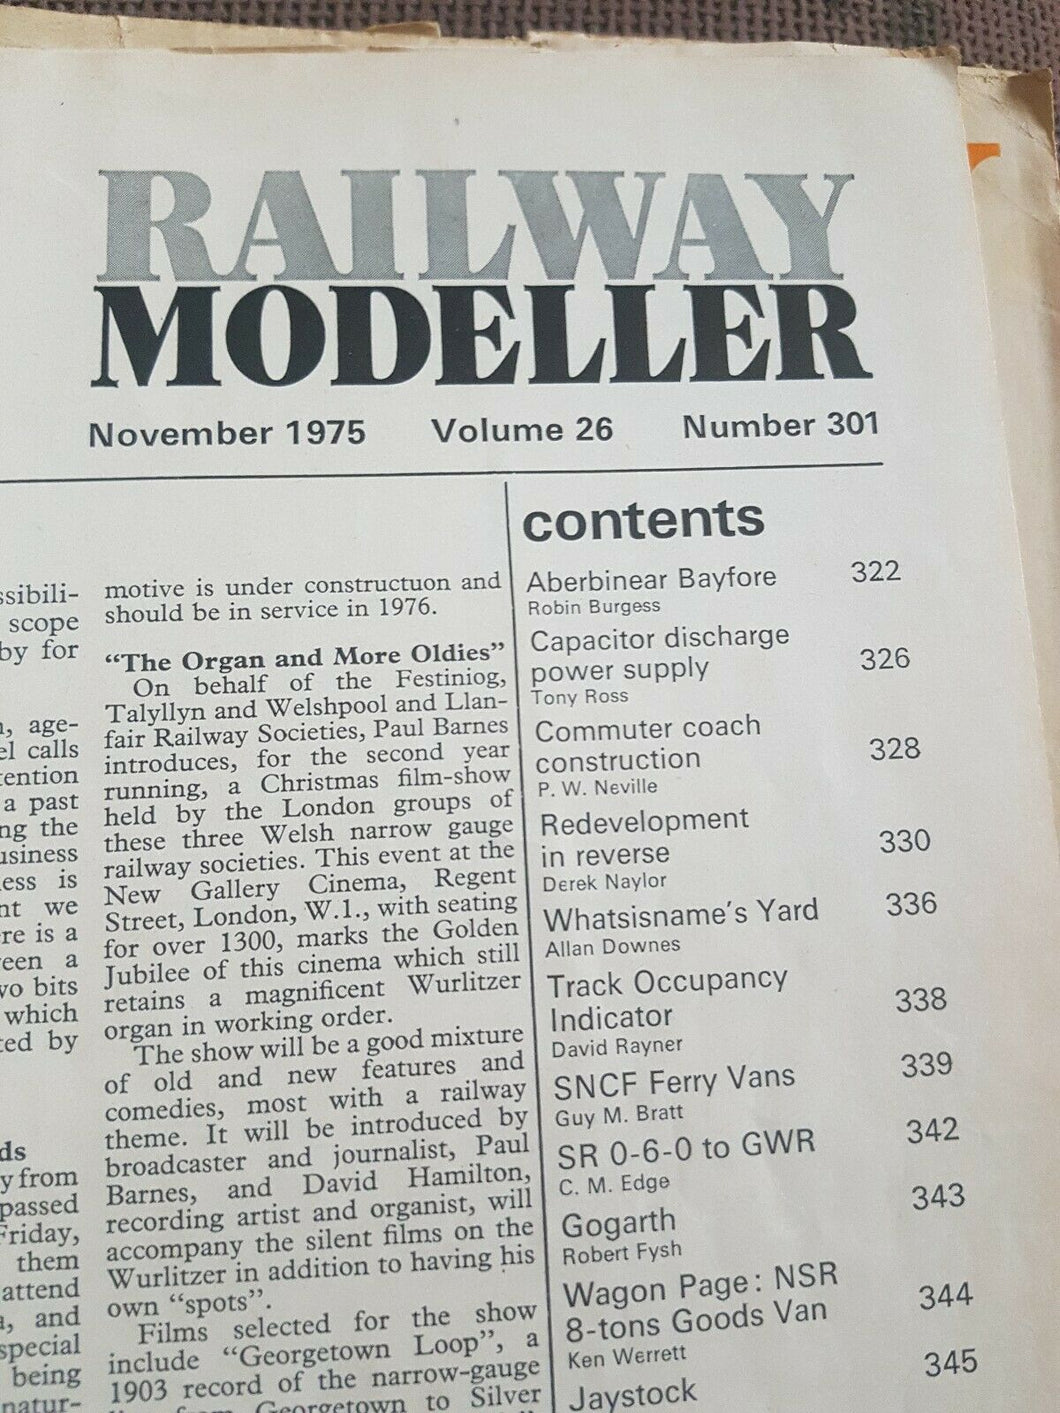 RAILWAY MODELLER Magazine November 1975. No Cover